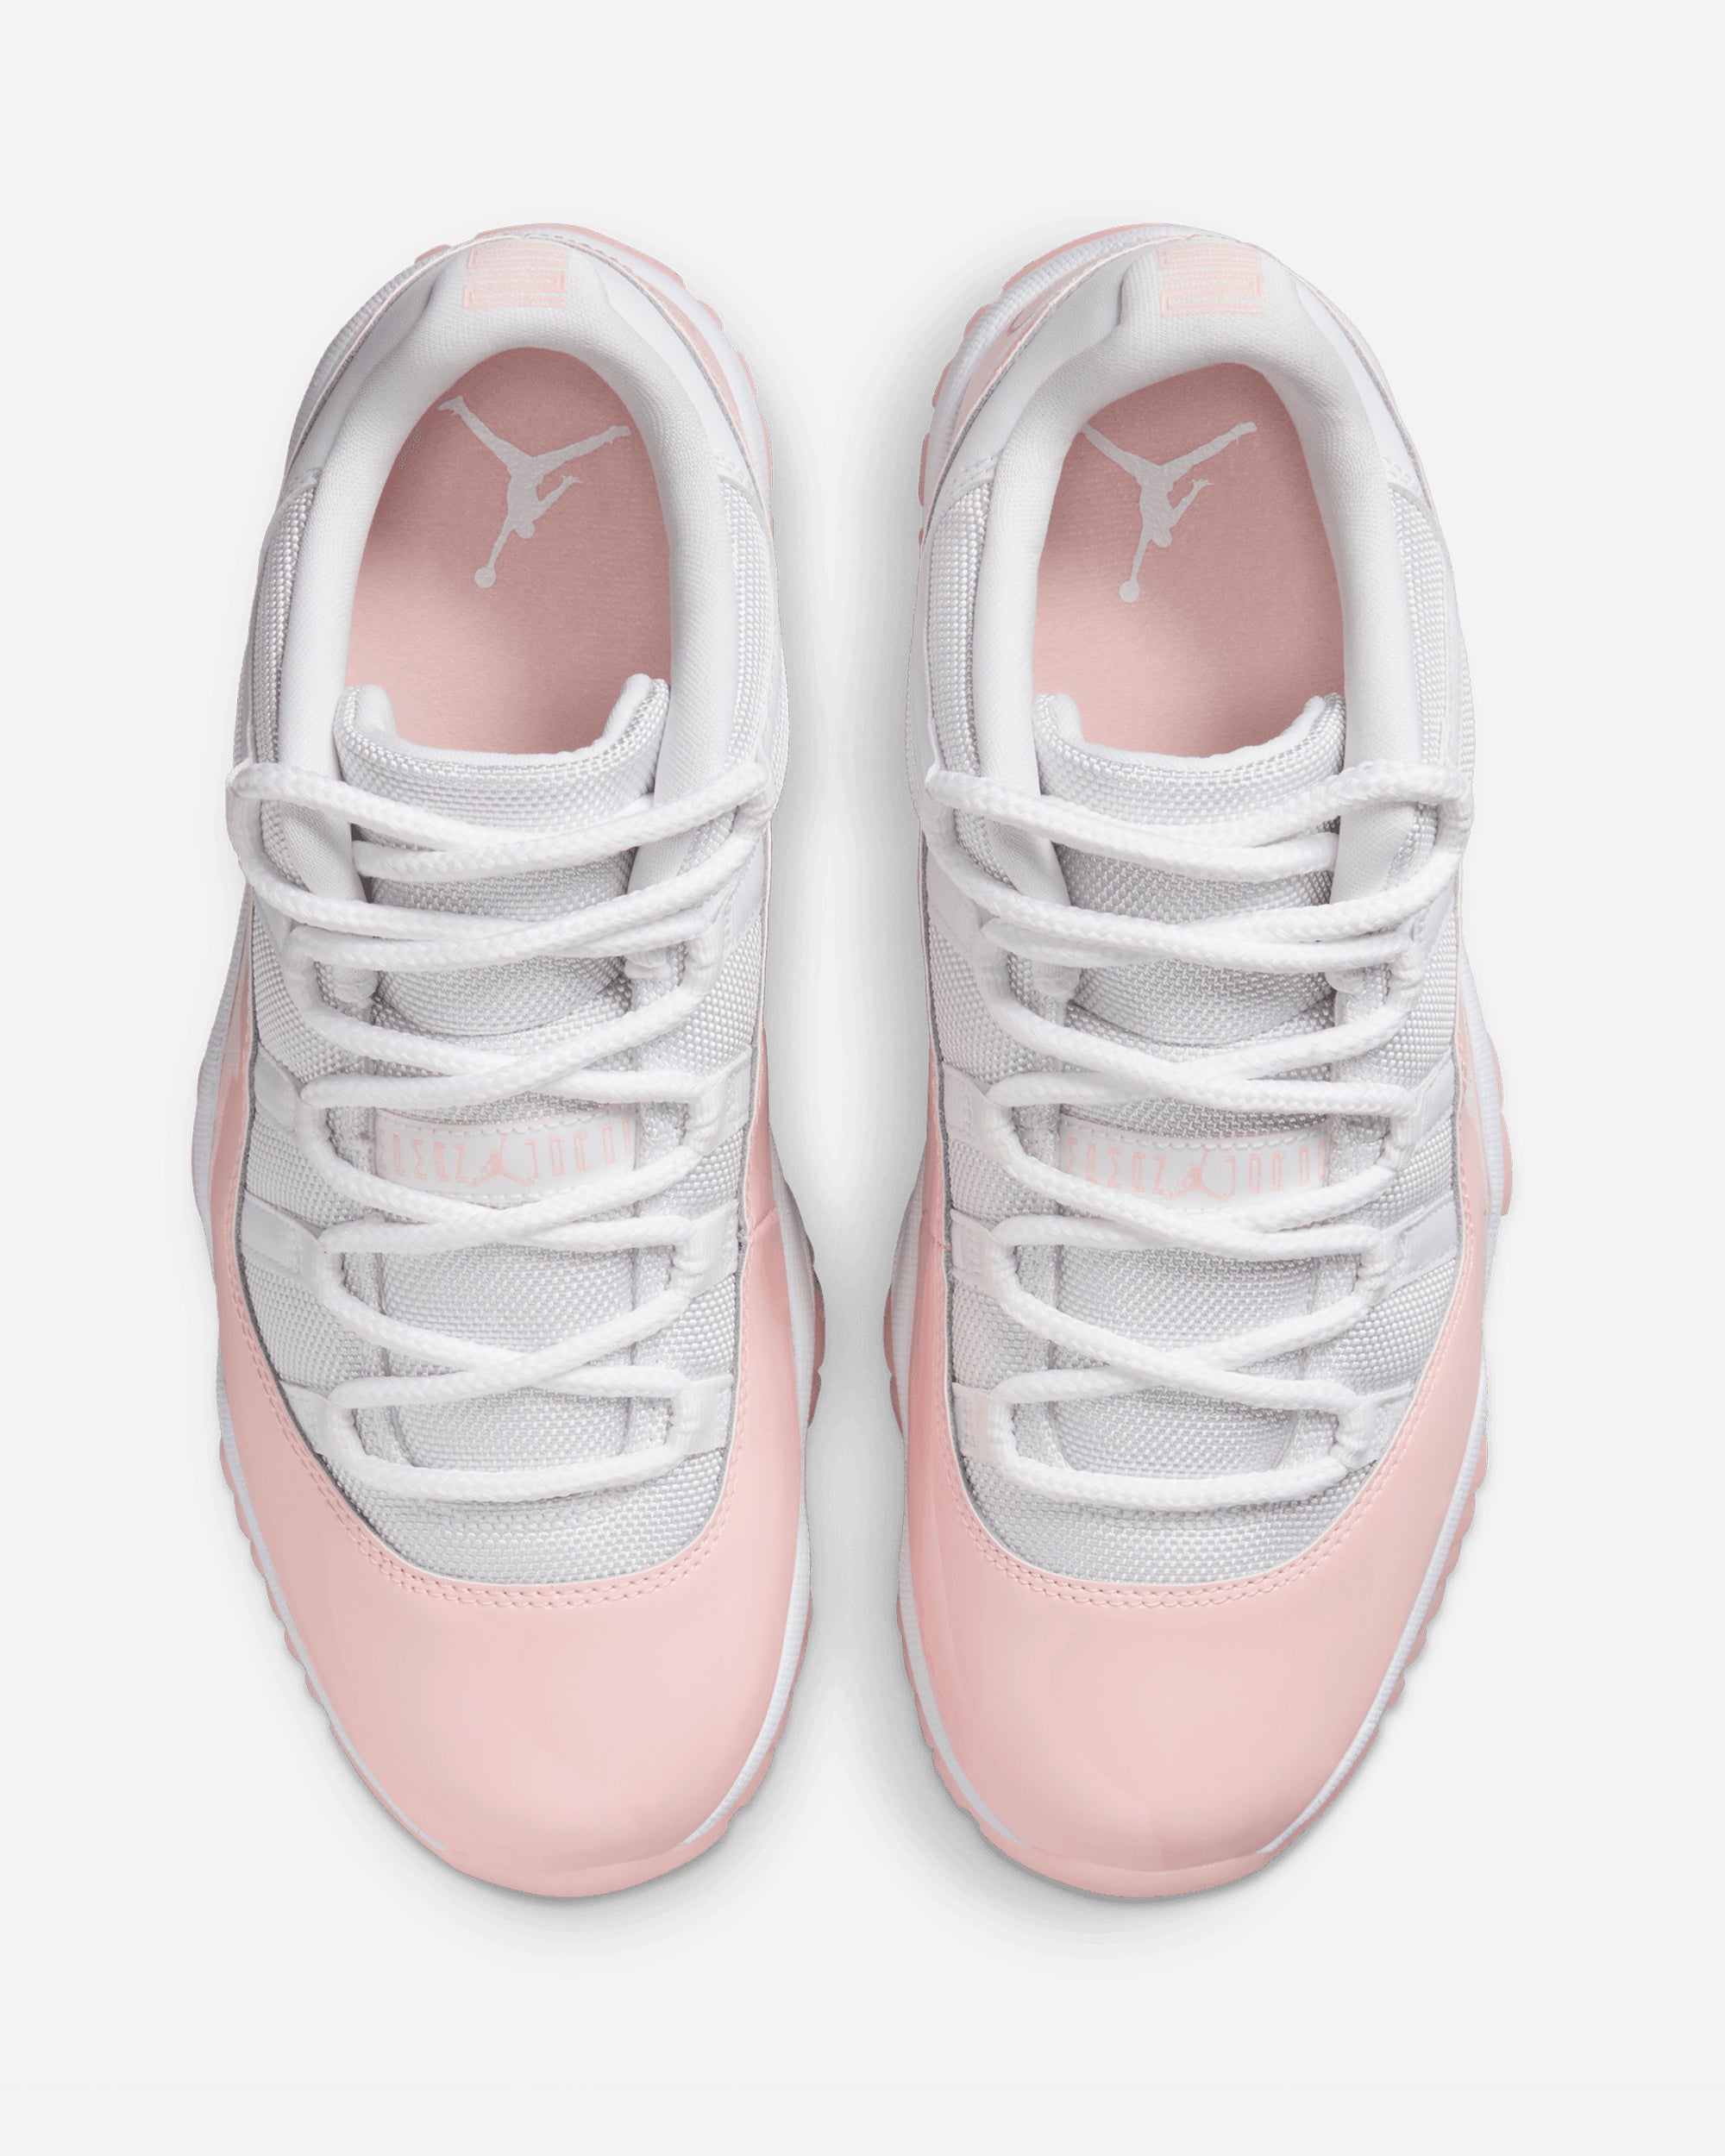 Jordan Brand Air Jordan 11 Retro Low 'Legend Pink' WHITE/LEGEND PINK AH7860-160